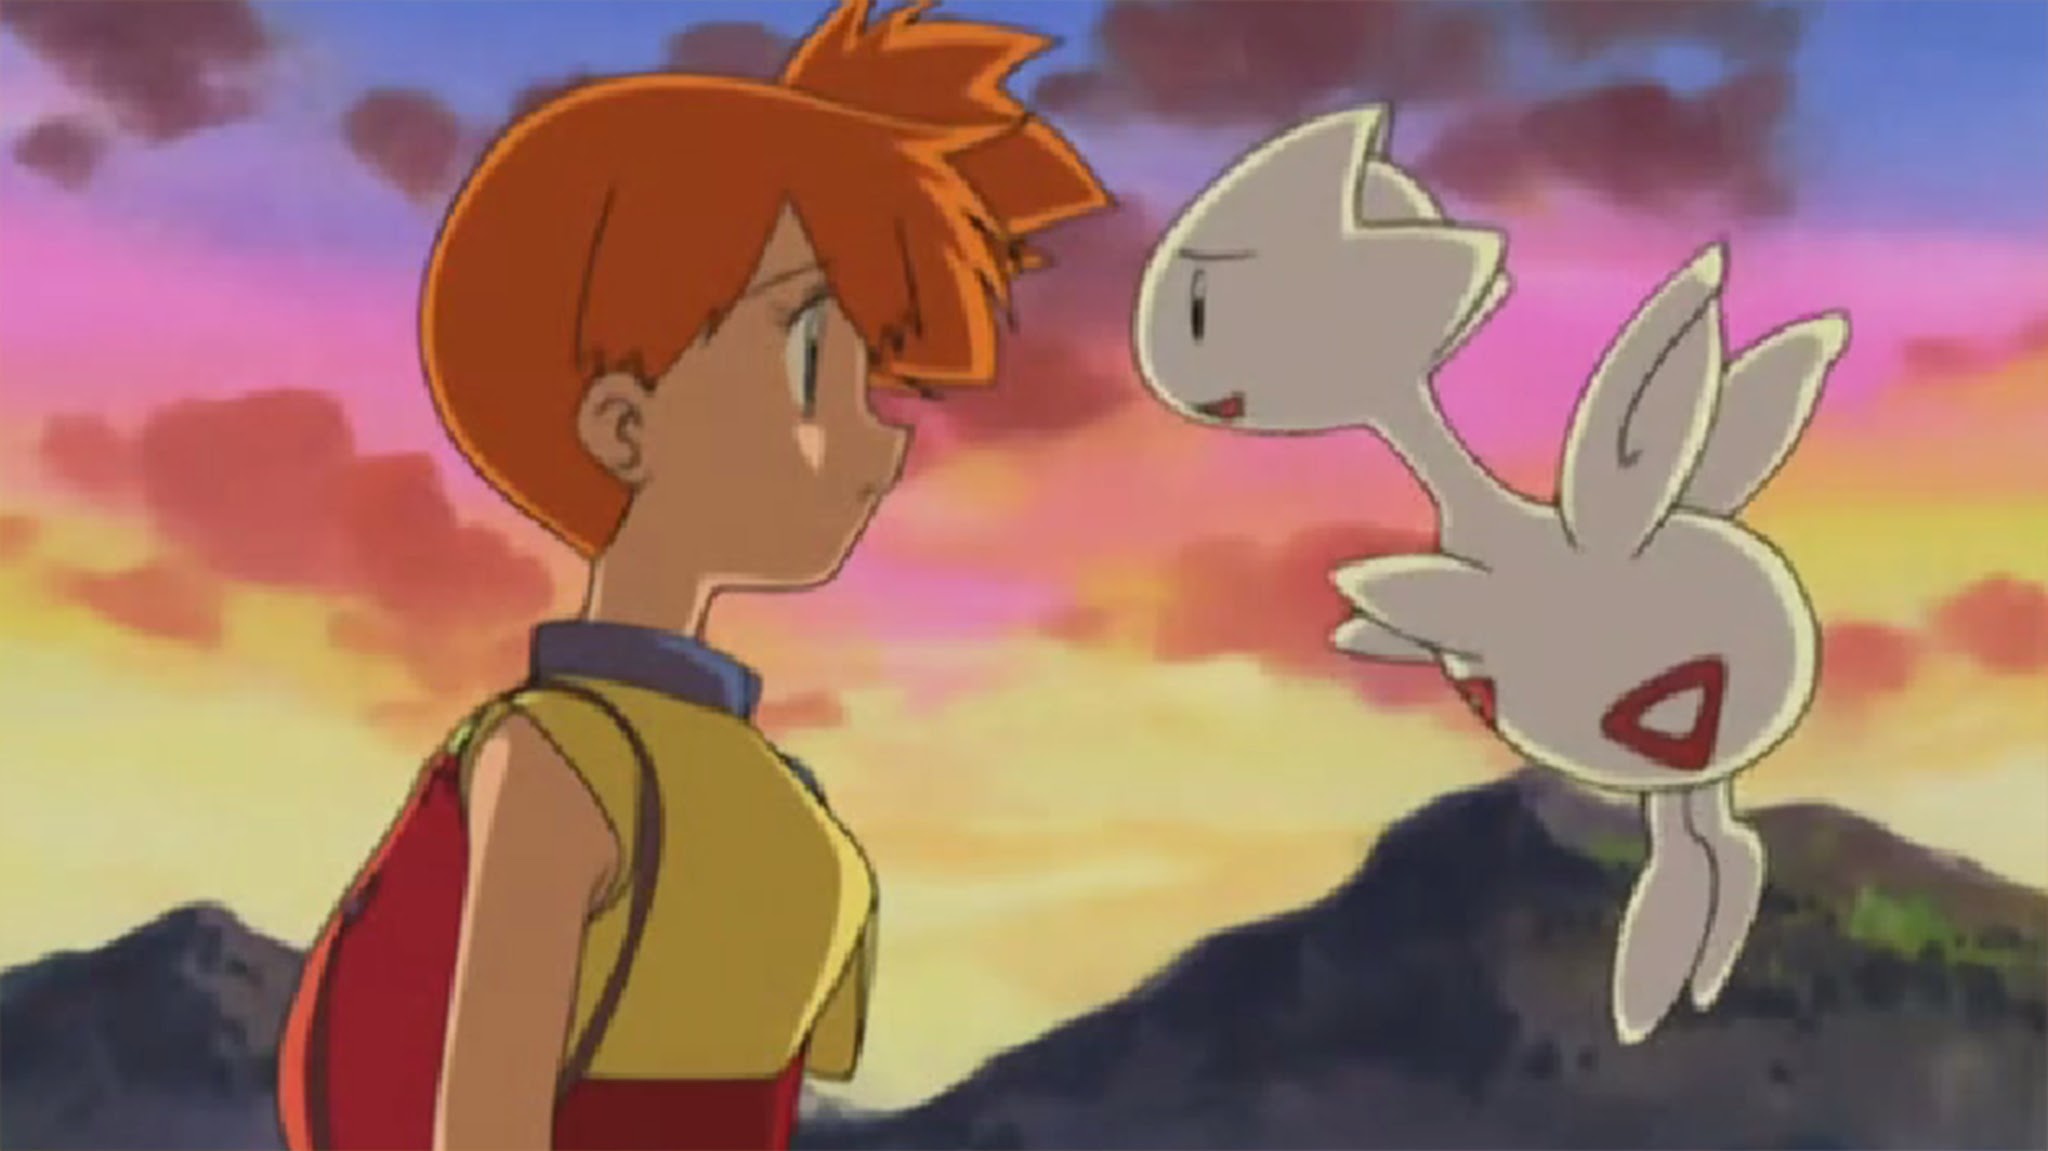 Pokémon - Ash Misty e Brock se reencontram (Dublado) 